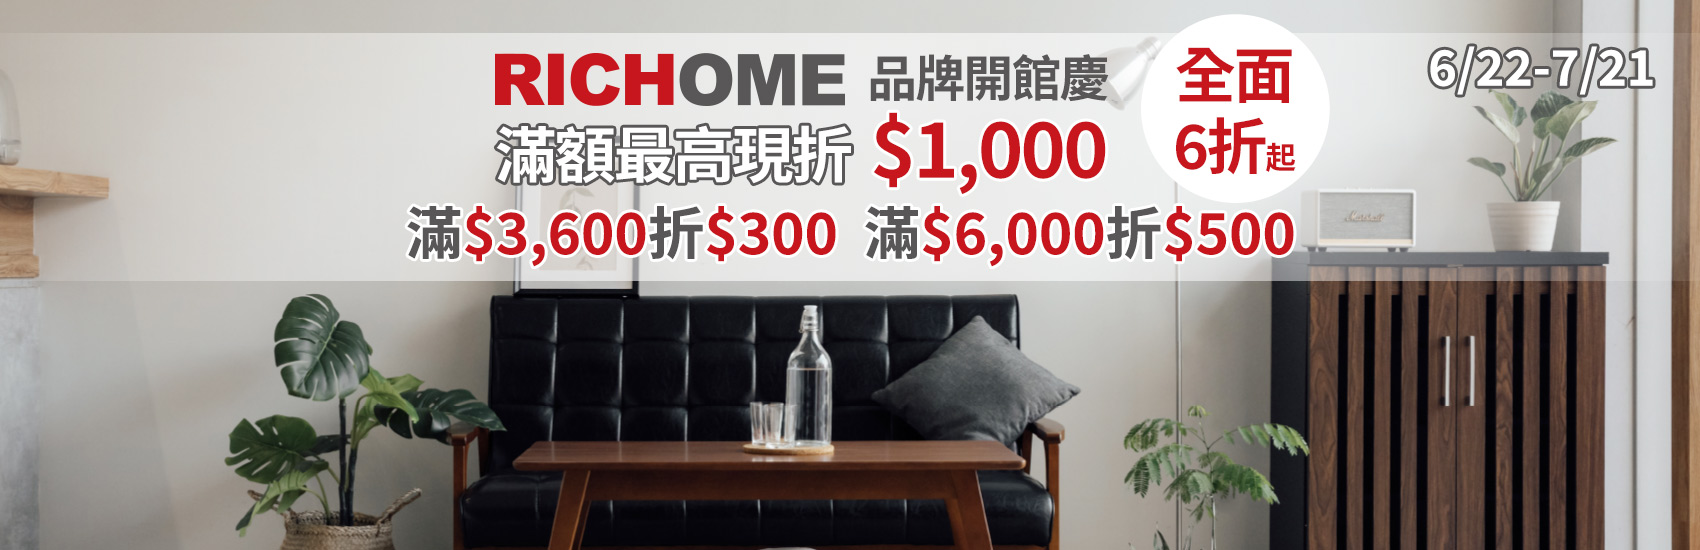 RICHOME品牌開館慶 滿額最高限折$1000